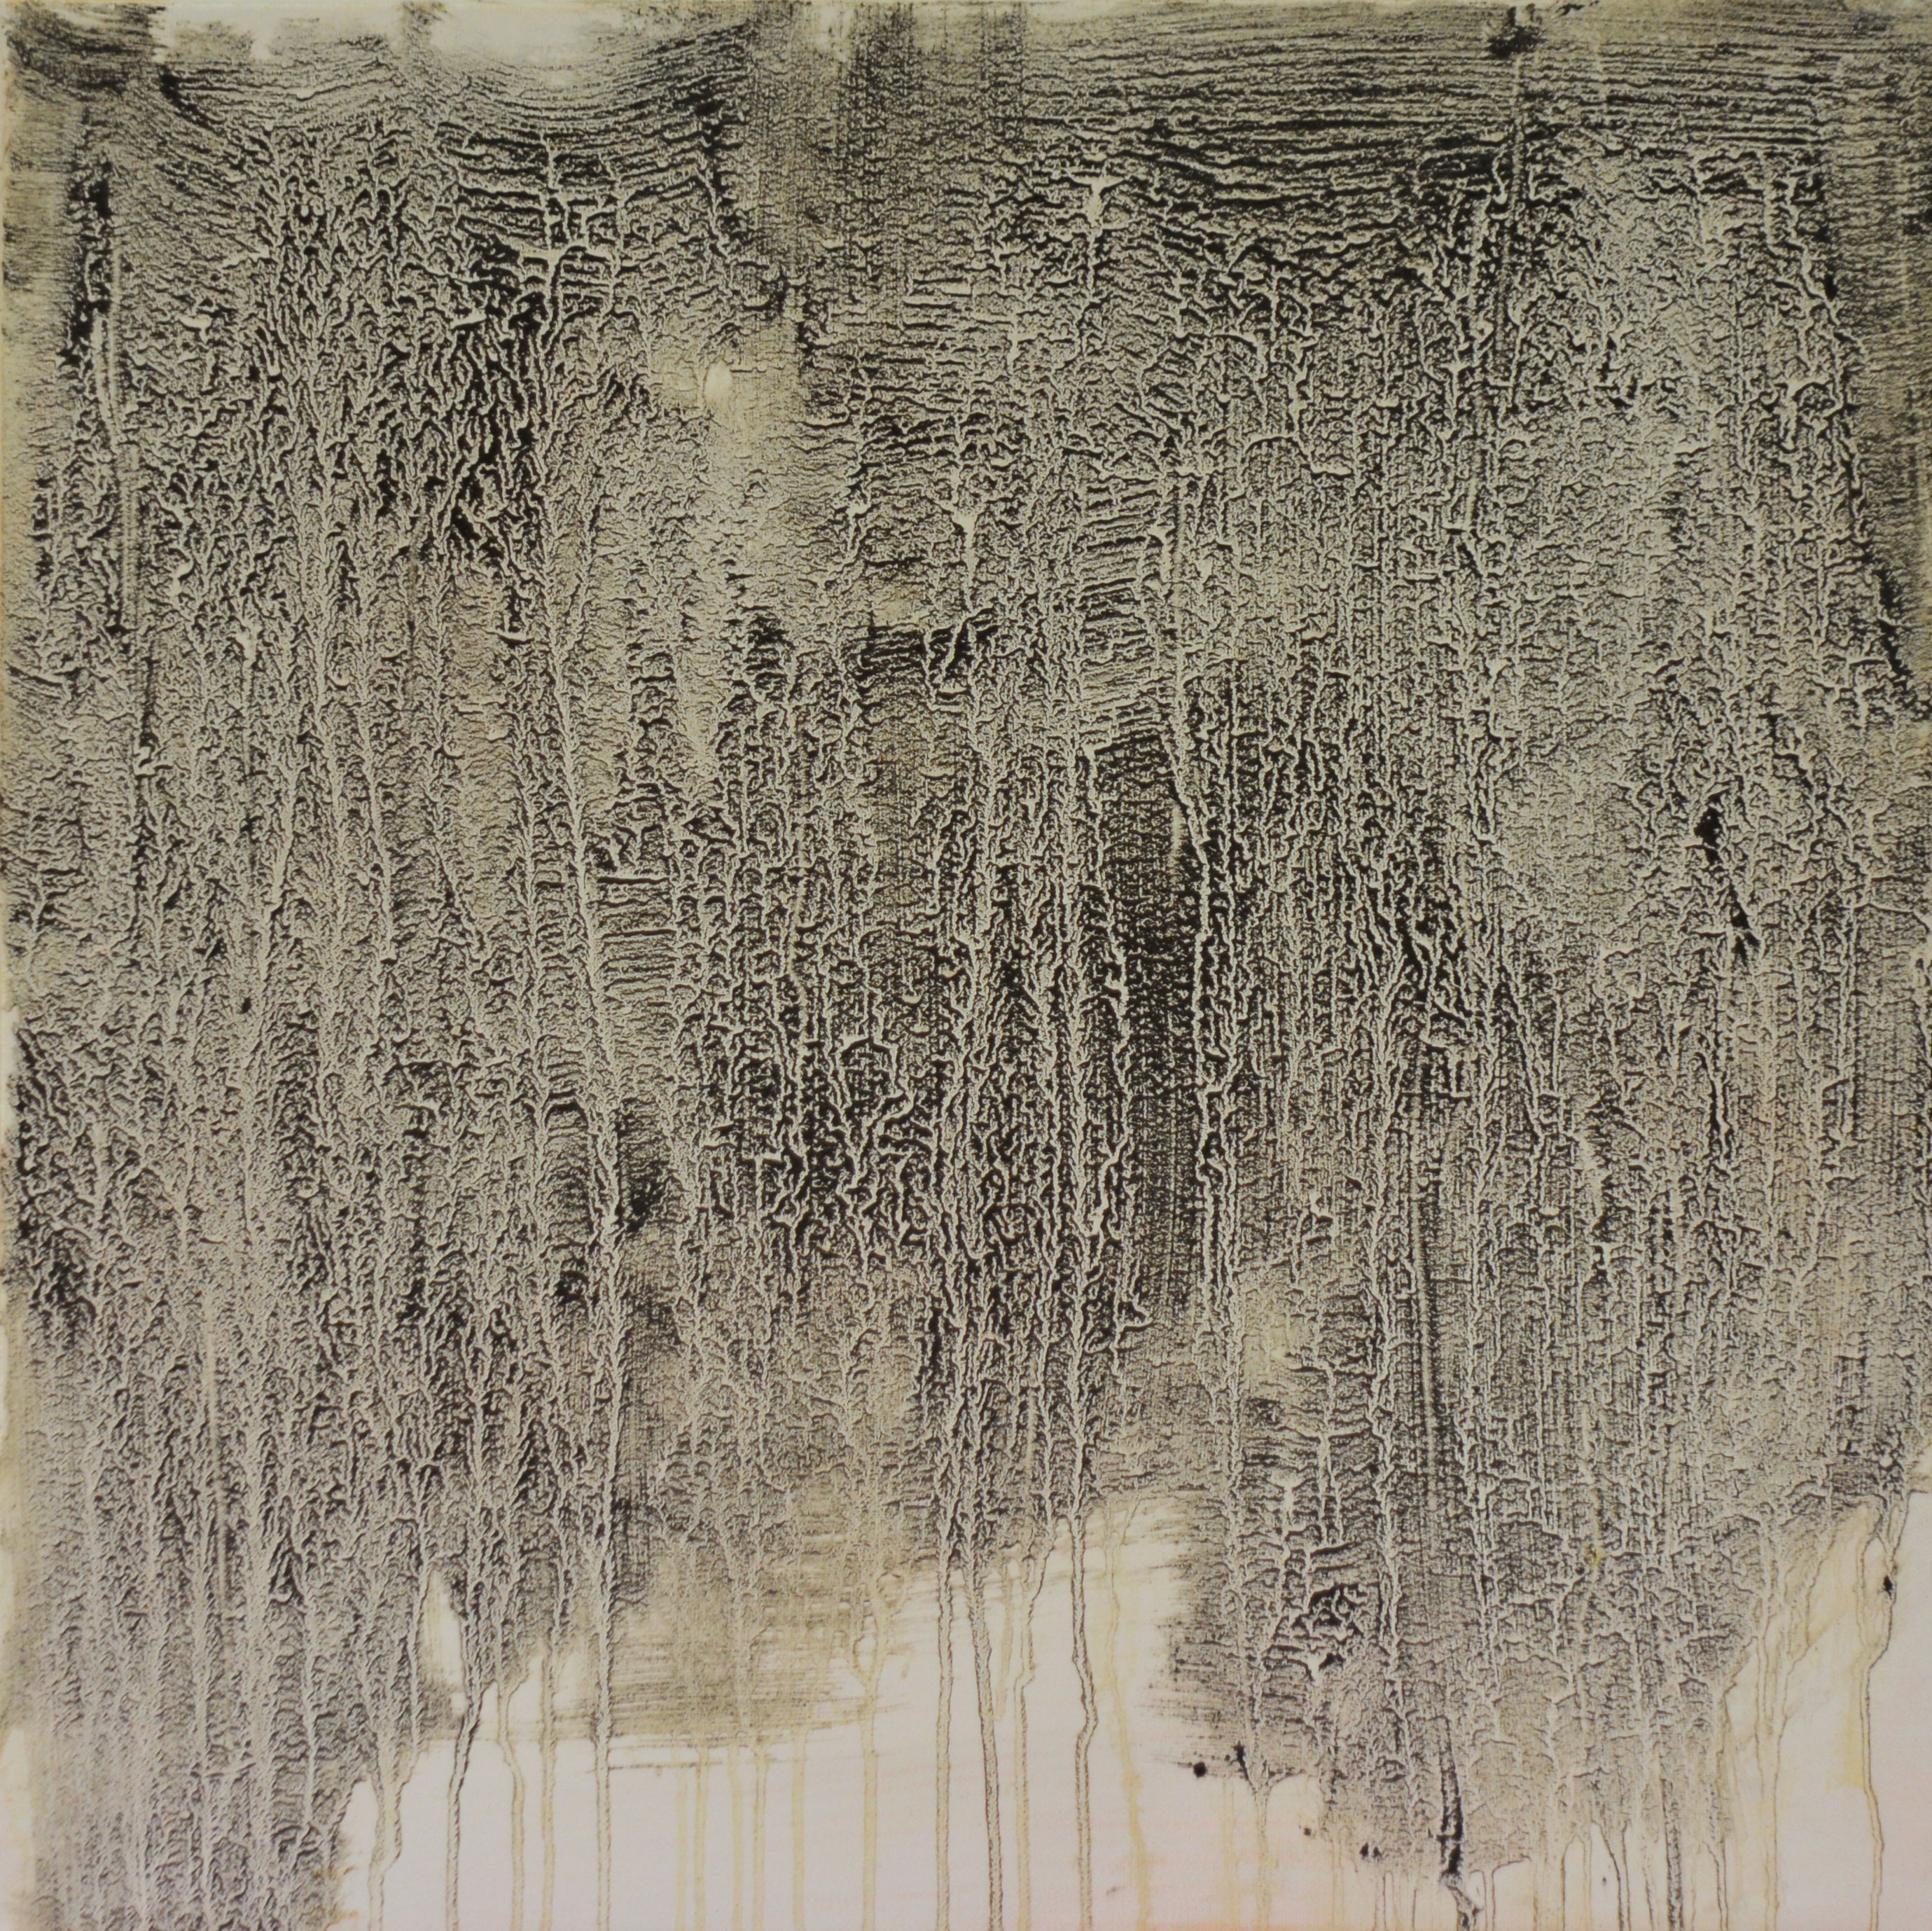 Án titils | Untitled 2015. Mineral powder from the lava Sínahraun and oil on canvas, 60 x 60 cm.